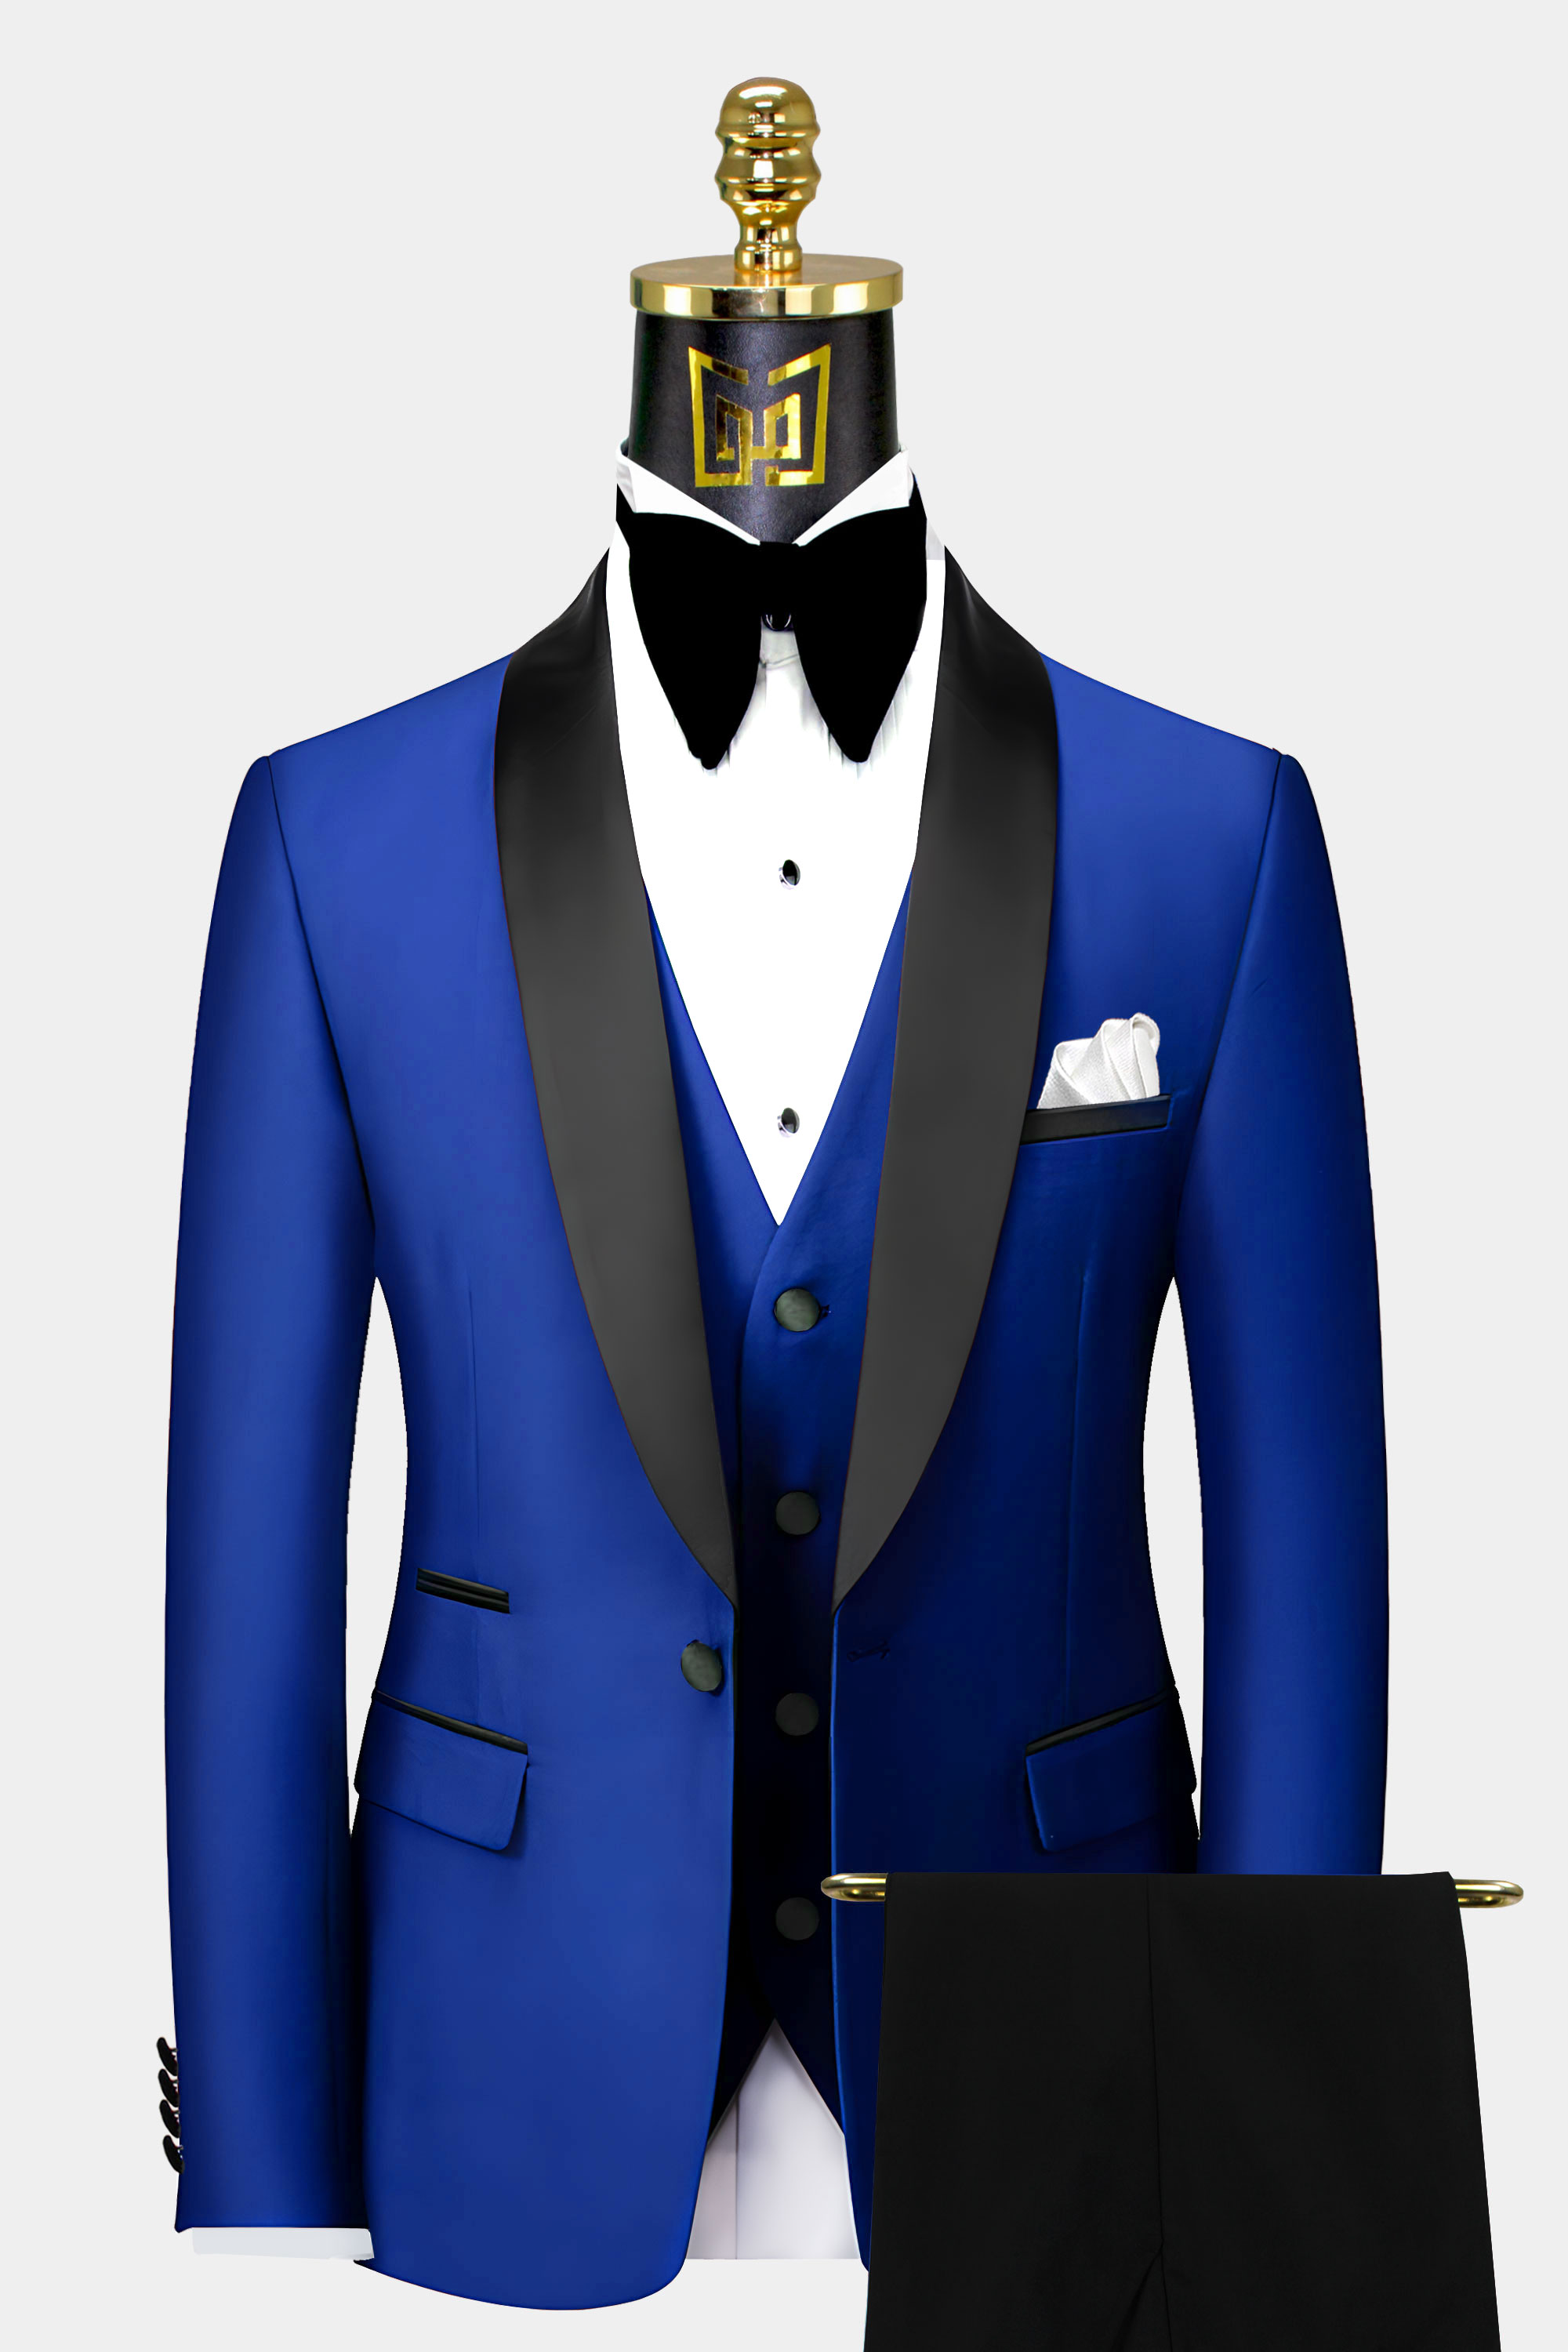 Mnes Royal Blue Tuxedo With Black Lapel Groom Wedding Suit From Gentlemansguru.com  